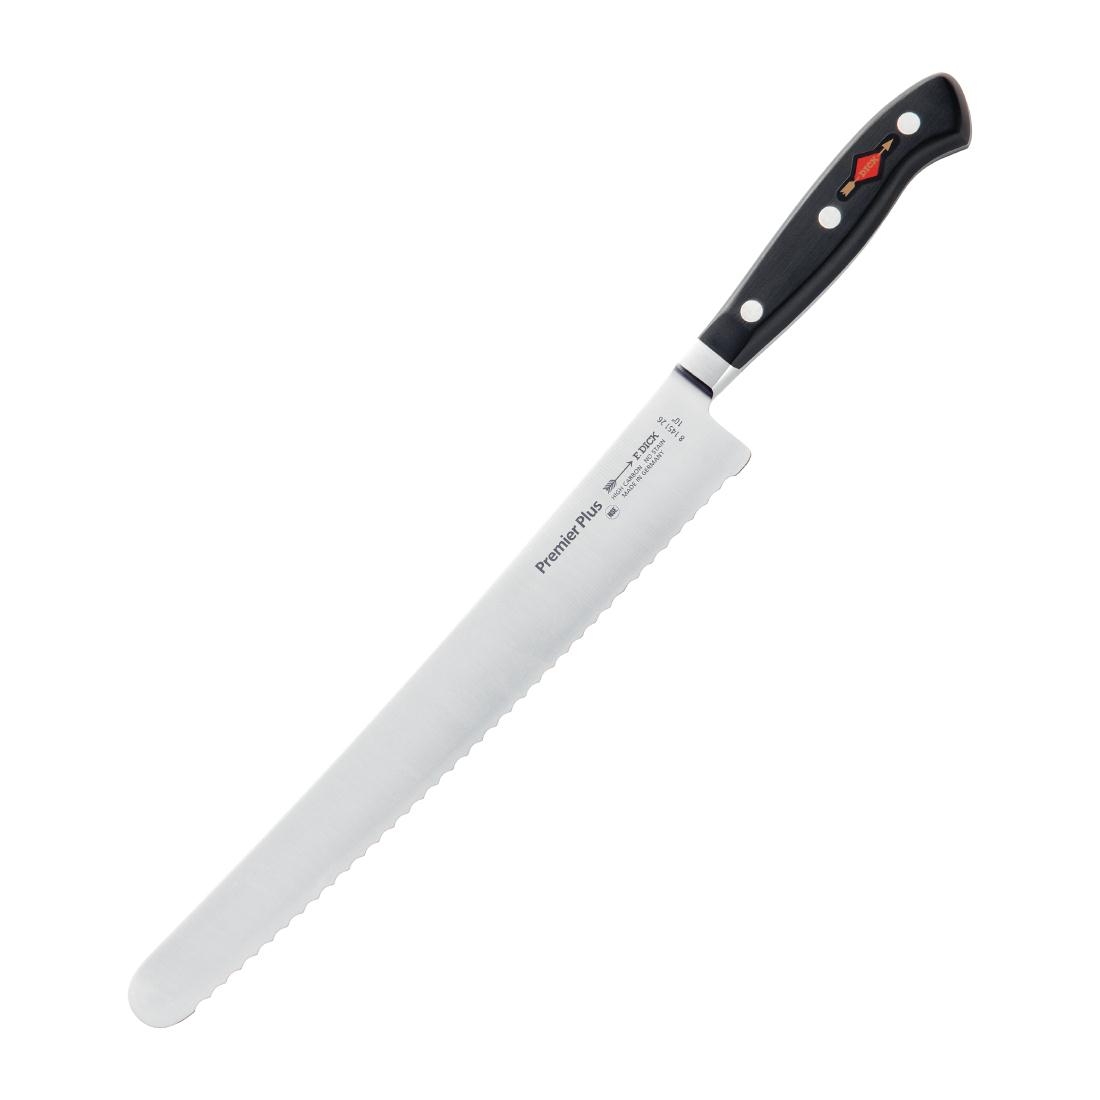 F dick. Нож dick 2139 15. Ножи dick Геркулес. Cock нож.